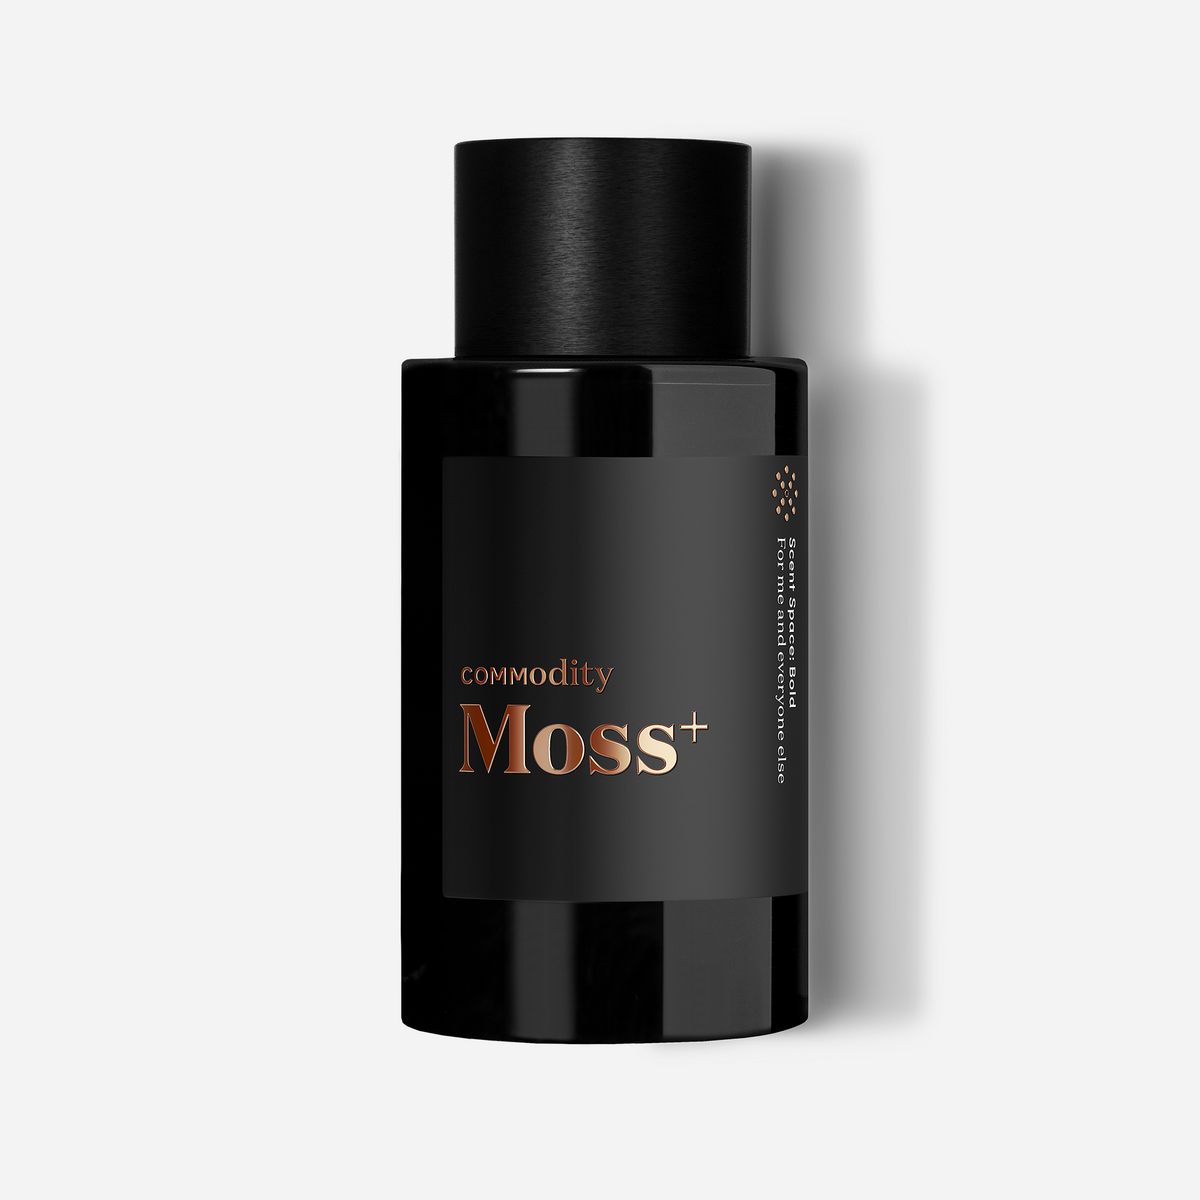 Moss+ – Commodity EU